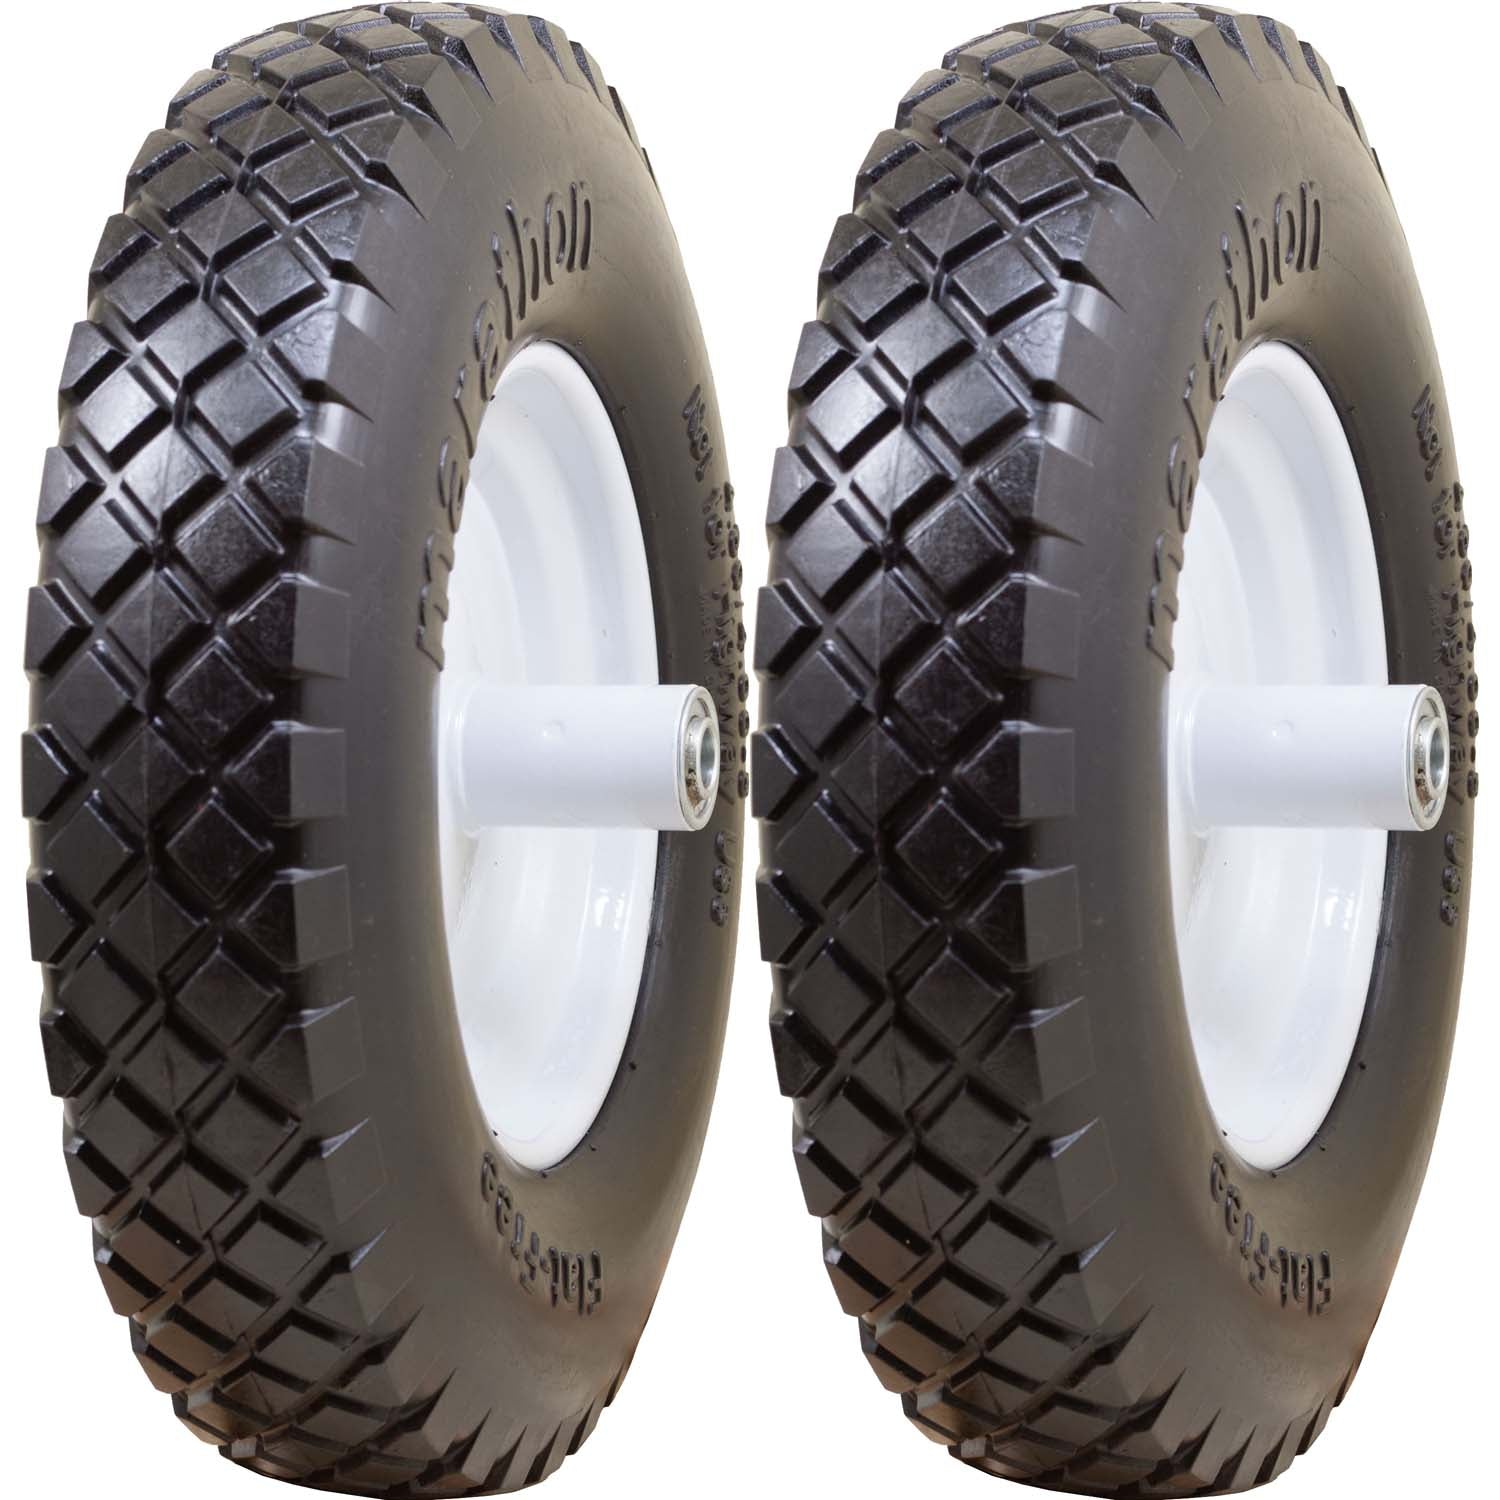 Marathon 00047P Flat Free knobby Utility Wheelbarrow Tire 4.80/4.00-8 Pack of 2